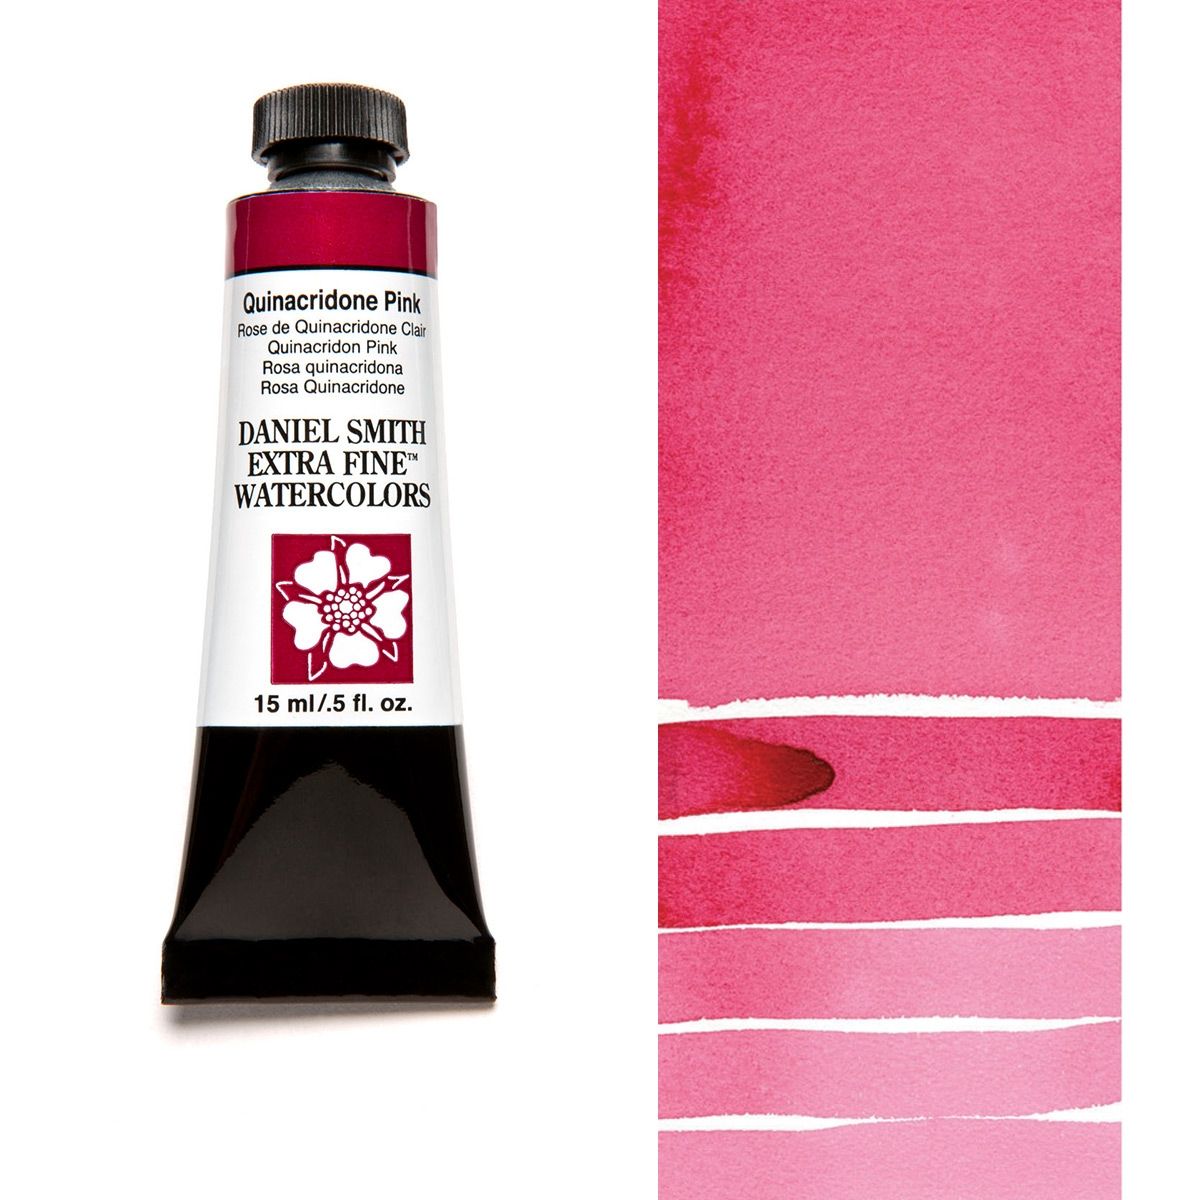 Daniel Smith Extra Fine Watercolors - Quinacridone Pink, 15 ml Tube